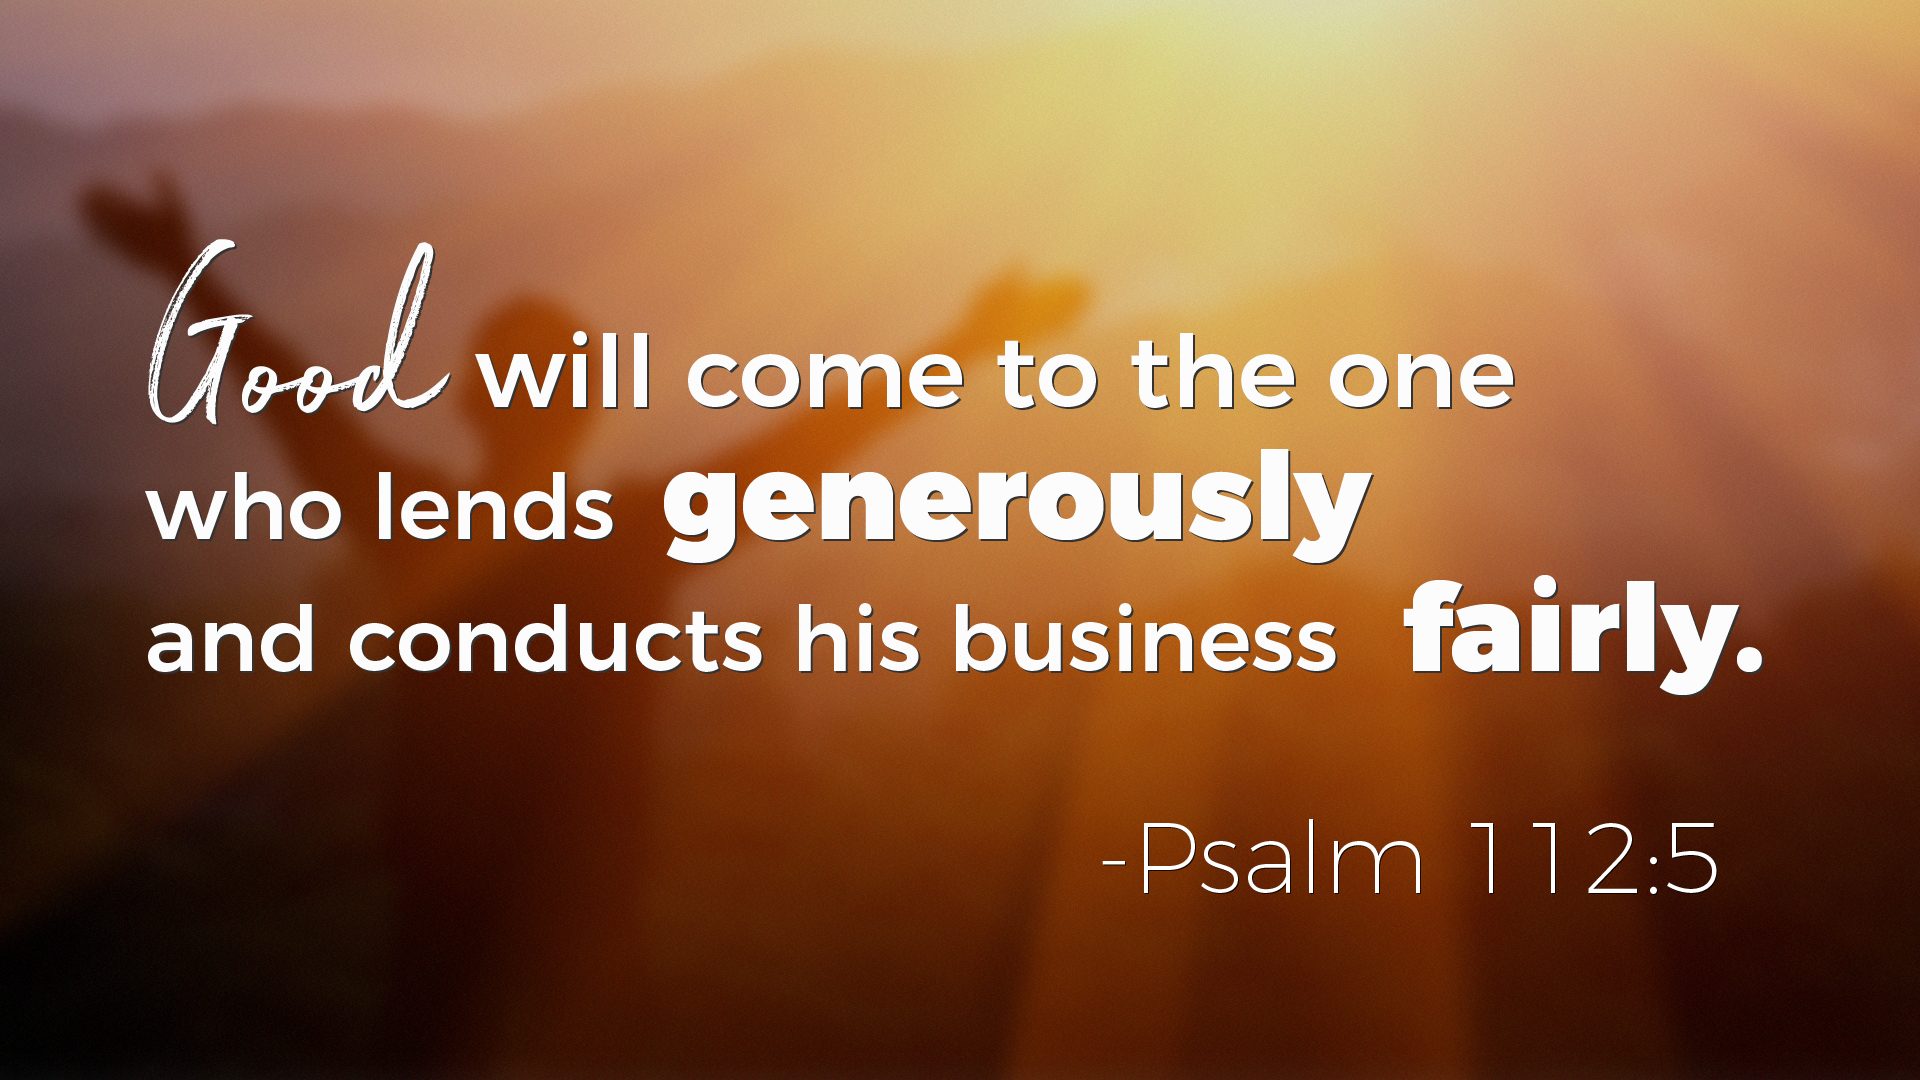 Psalms on Wealth - Psalm 112:5